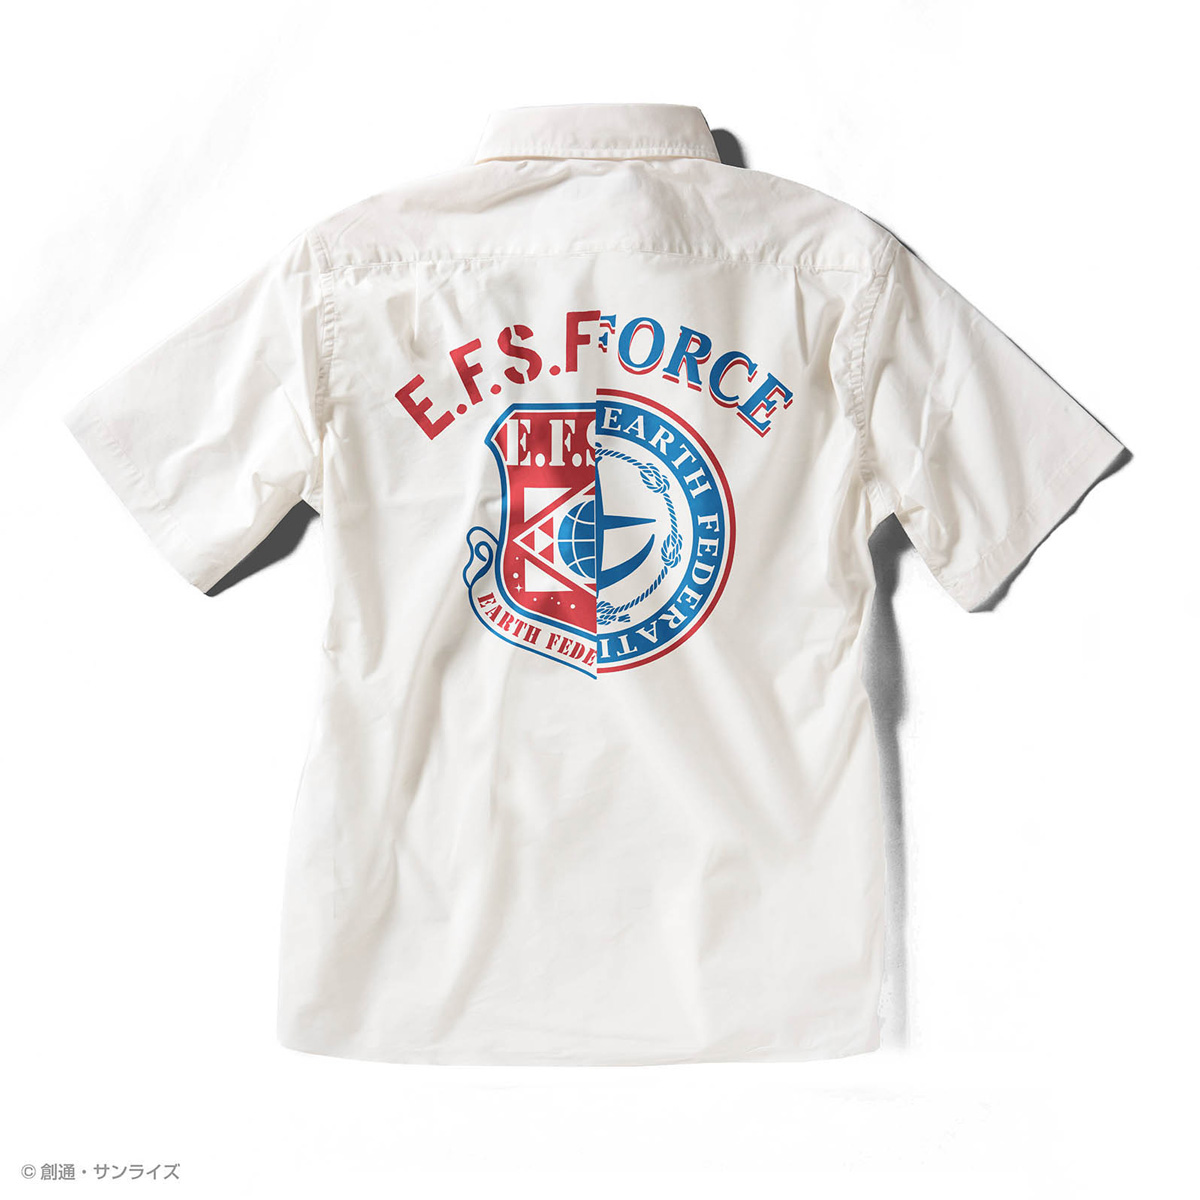 STRICT-G『機動戦士ガンダム』 クールマックス 半袖オープンカラーPt.シャツ E.F.S.F.